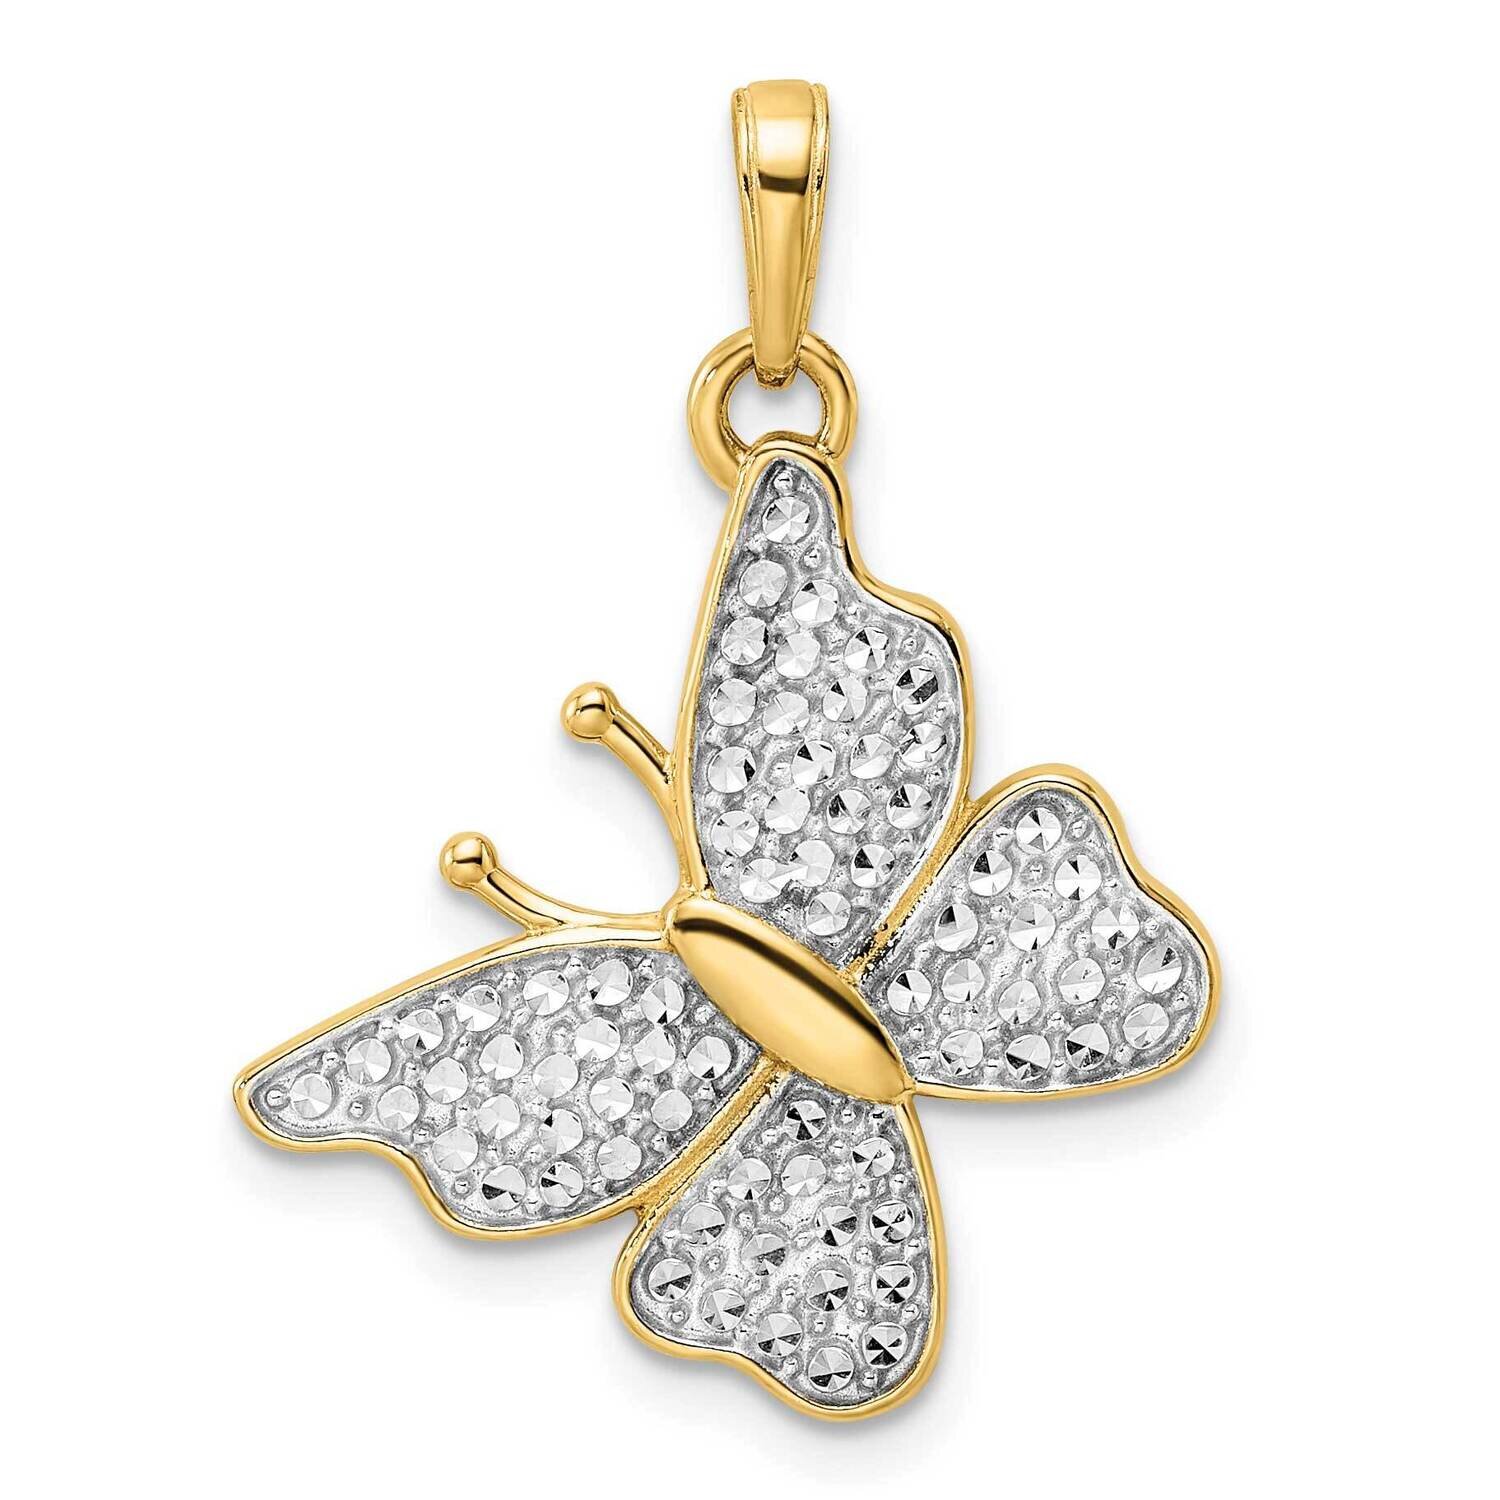 Fancy Butterfly Pendant 14k Gold and White Rhodium Diamond-Cut M2968